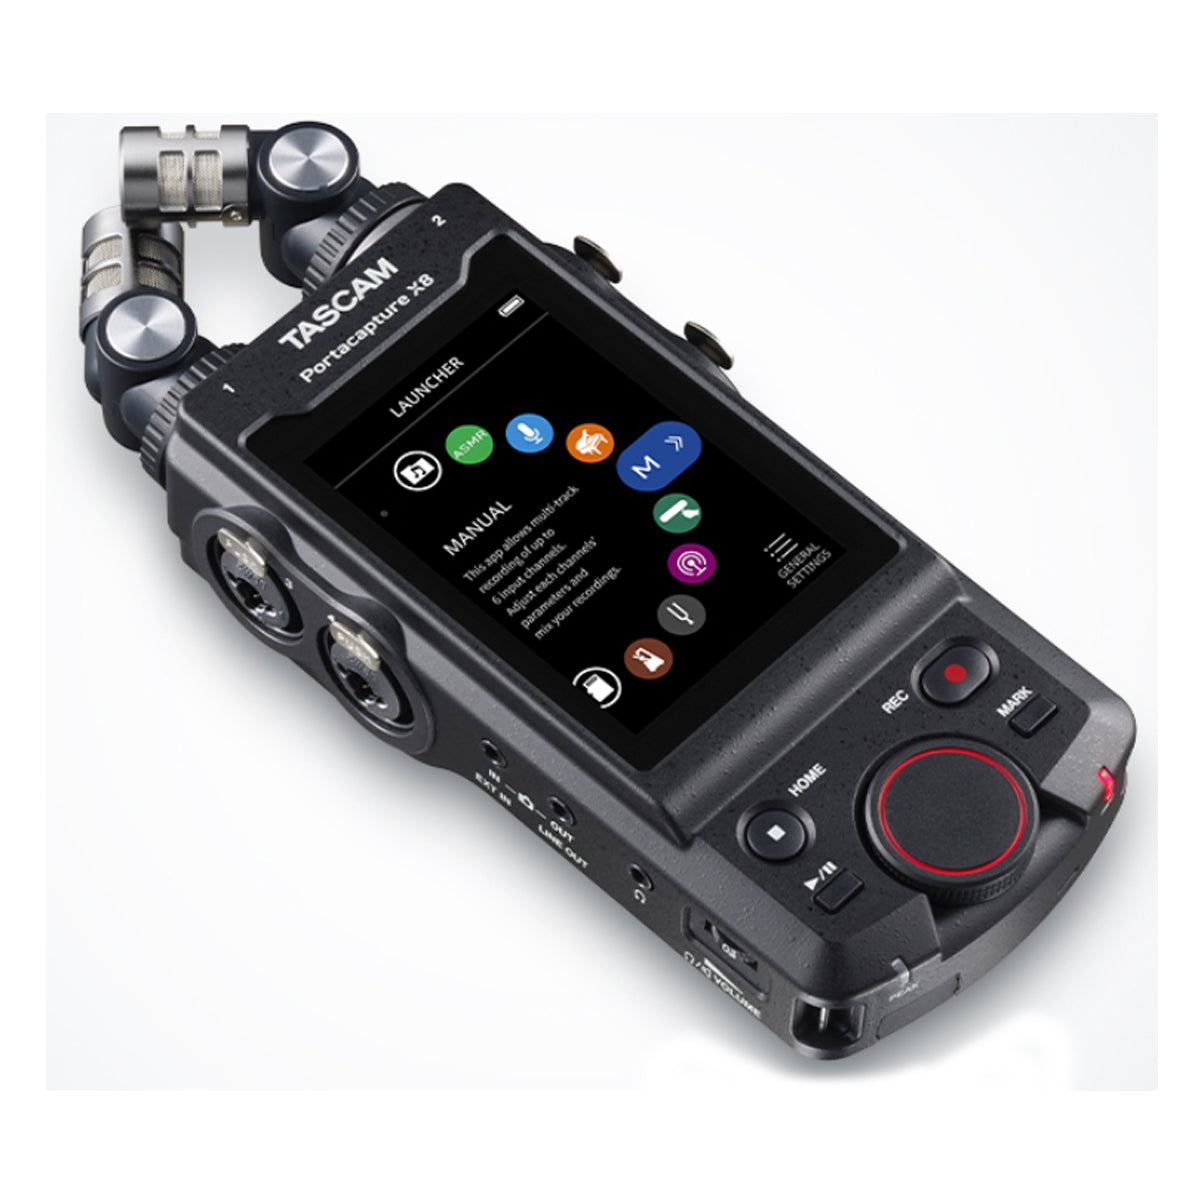 Tascam Portacapture X8 Hand Held Recorder High Resolution Adaptive Multi-Track